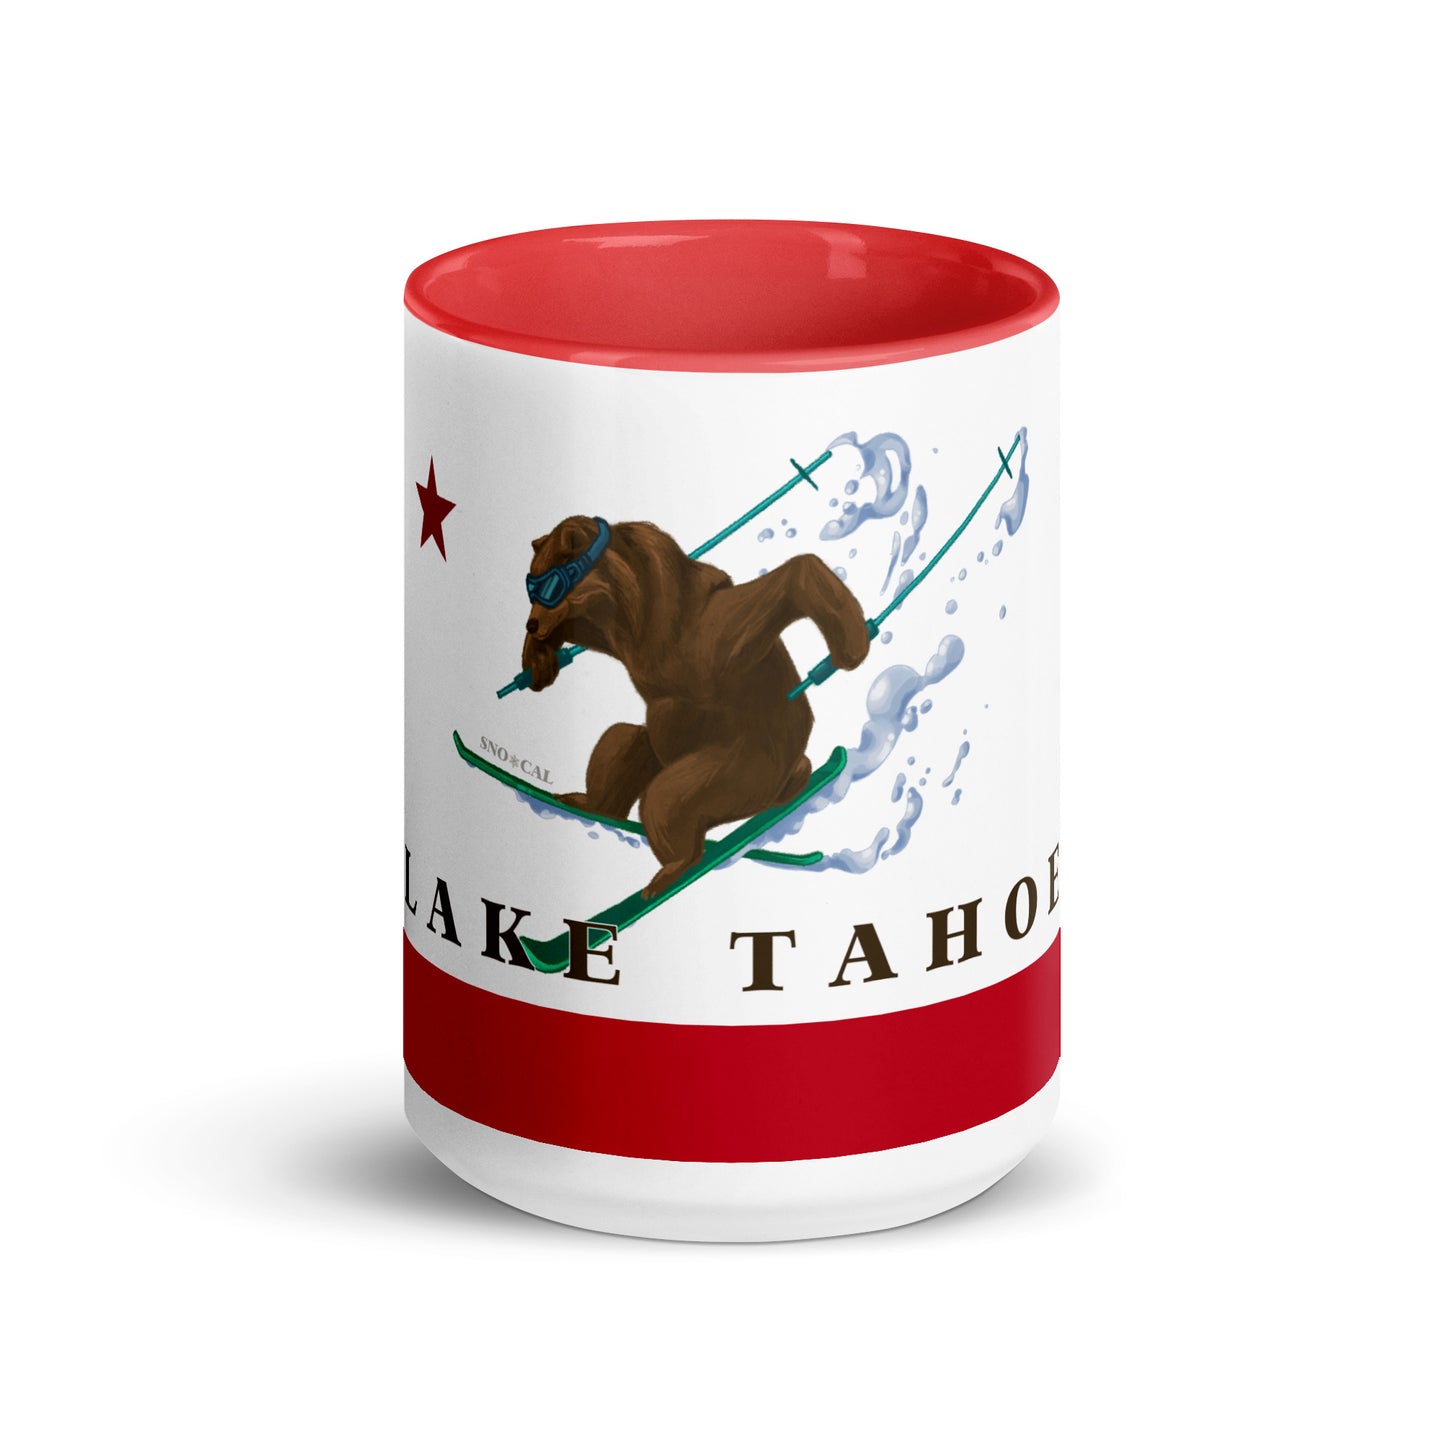 Lake Tahoe Skiing Grizzly Mug